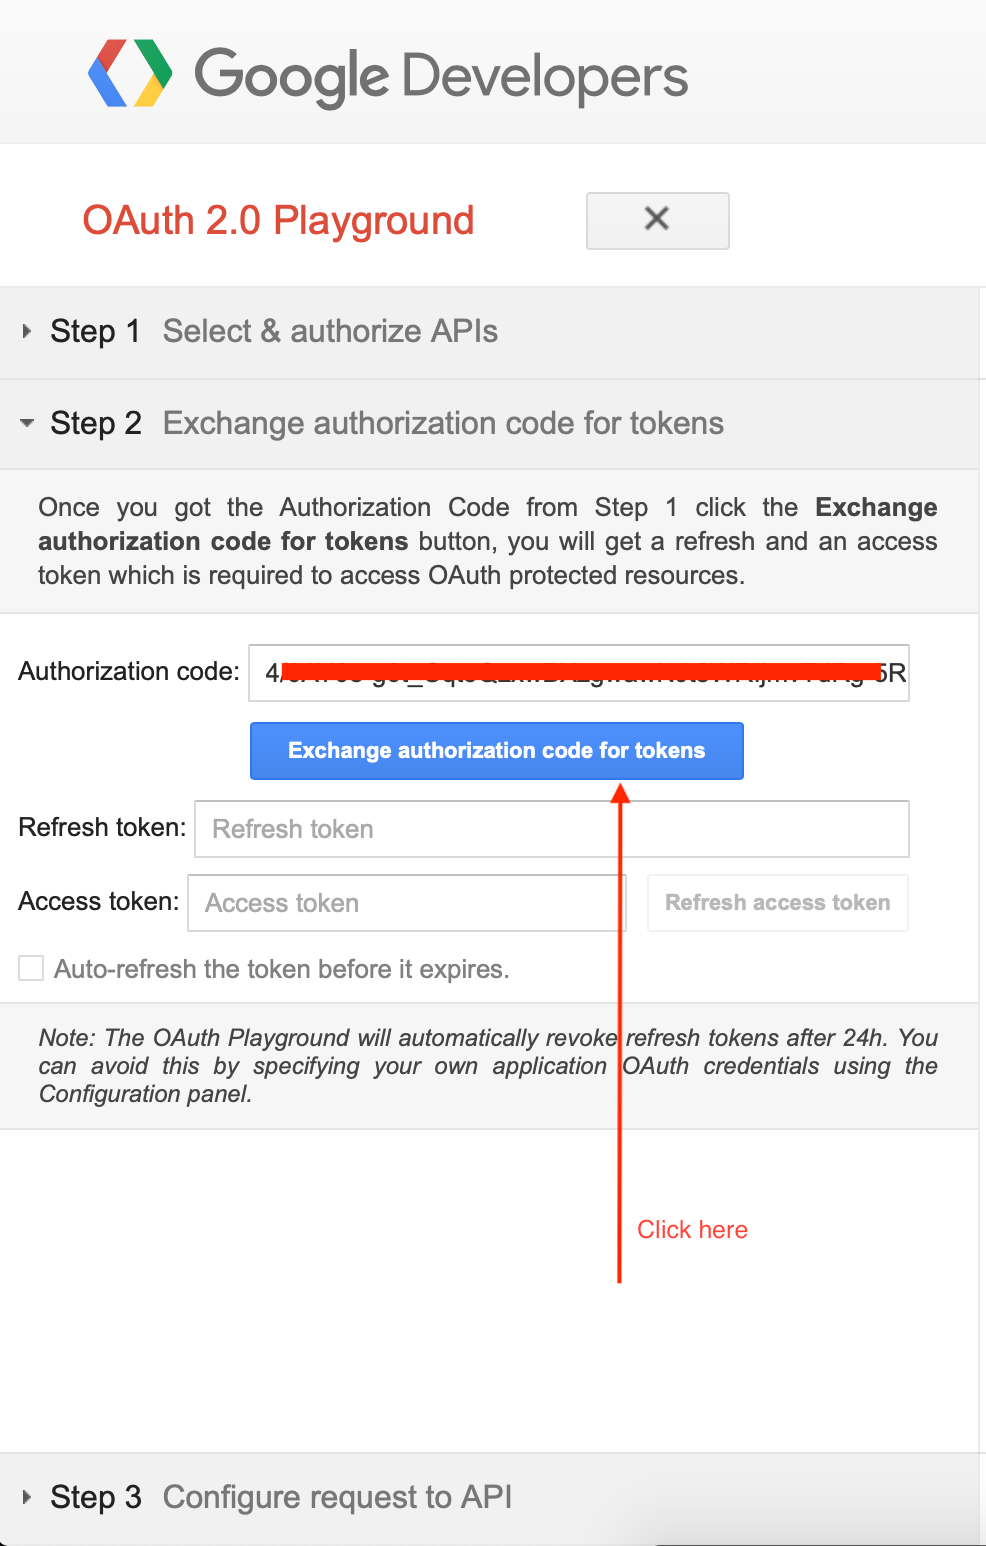 Get the refresh token: Exchange authorization code for tokens.